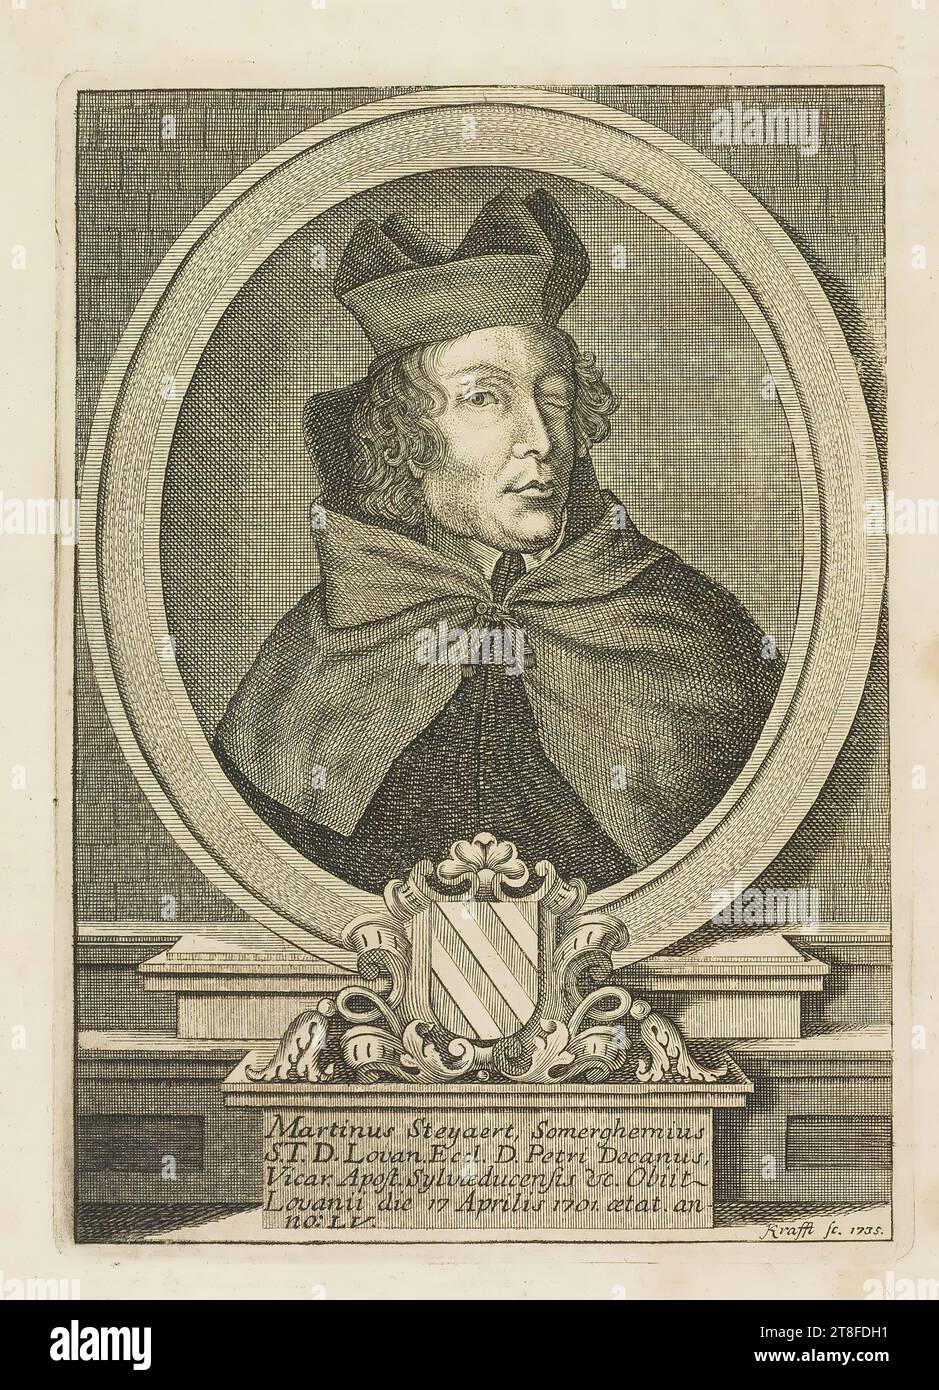 Portrait of a man with one eye. Below a pedestal crowned with a coat of arms. Martinus Steyaert, Somerghemius,S.T.D. Lovan.ECCL.D.PEtri Decanus,Vicar.Apost.Sylvaeducensis vc.OBiit,Lovanii die 17 Aprilis 1701. aetat.an-,no: LV. Krafft Sc. 1735 Stock Photo